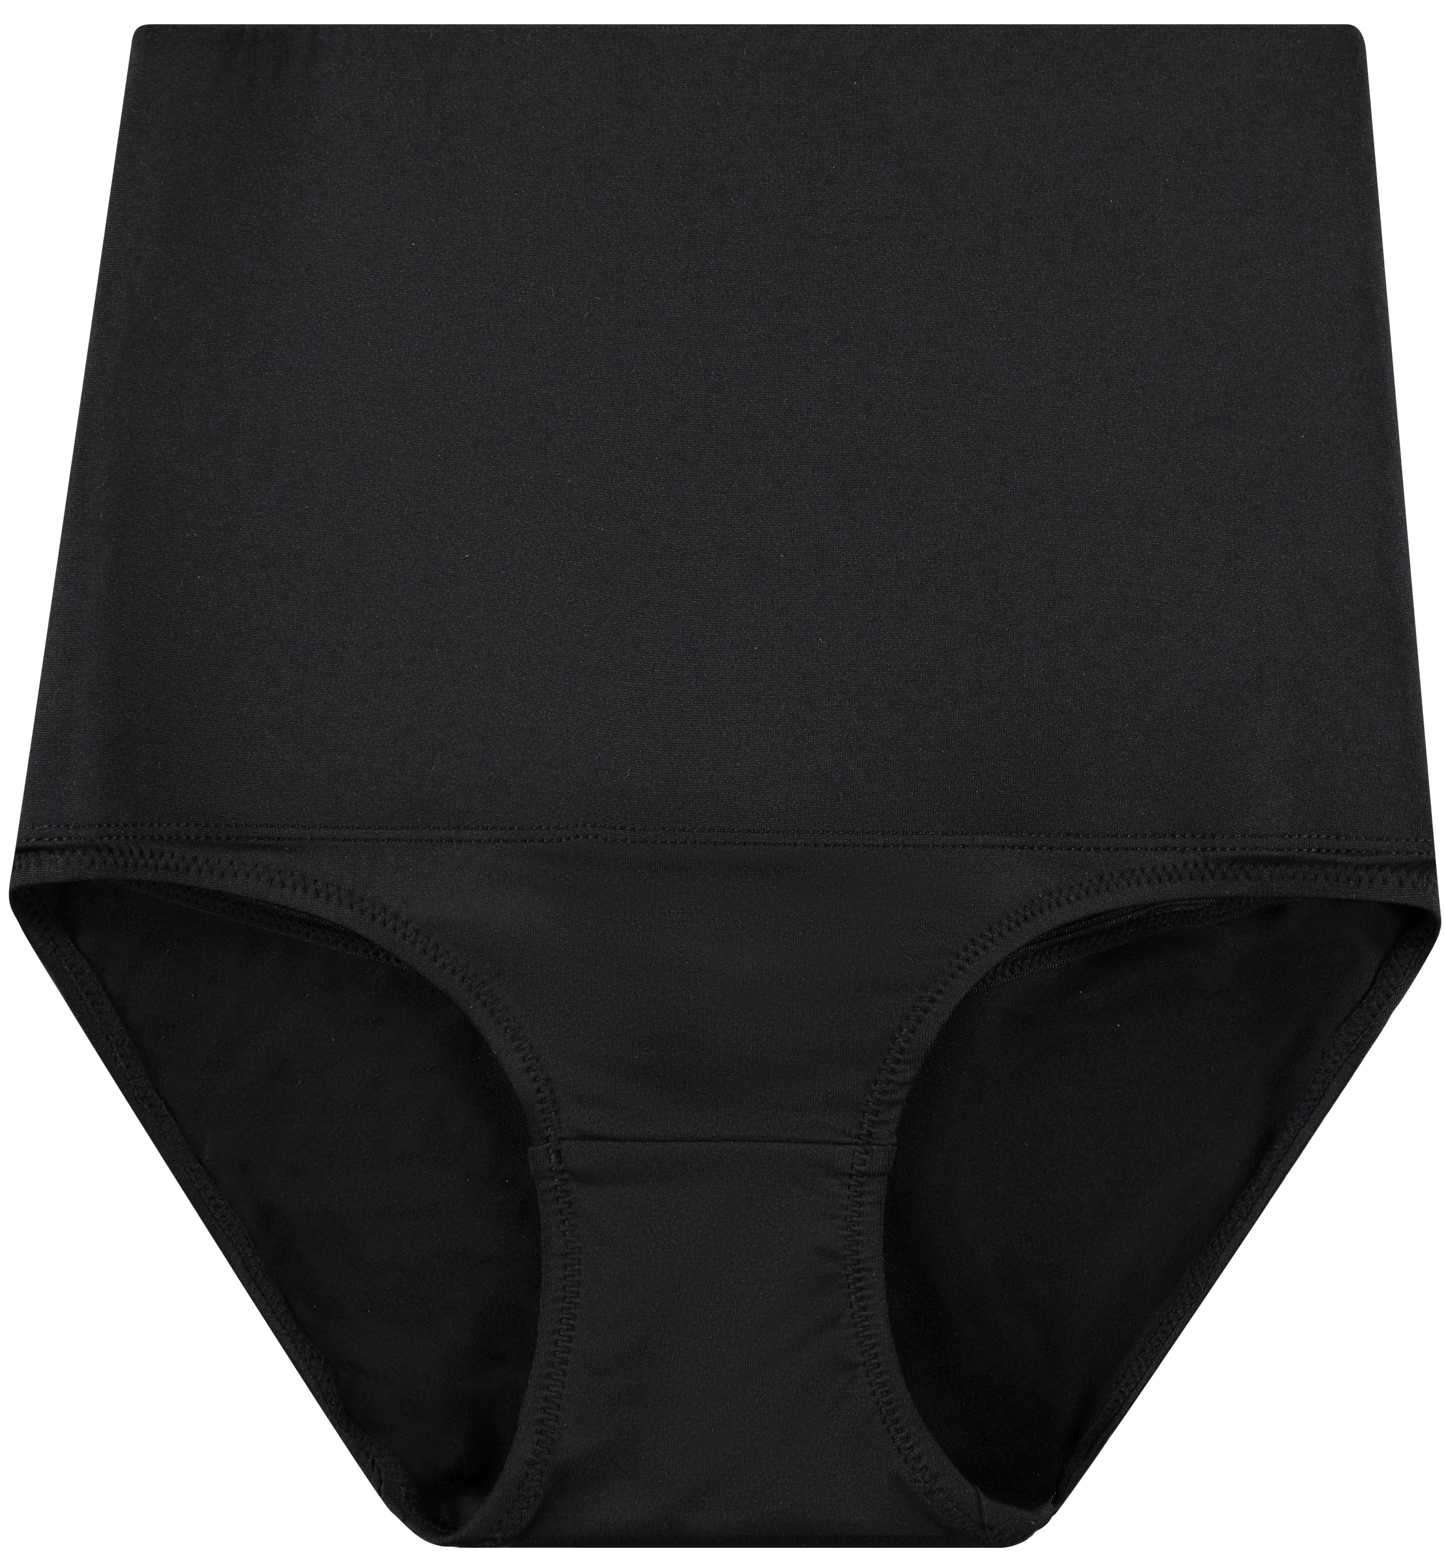 Wild Elegance : Designer Duo of Nude Leopard Print Shaper Panties - Breathable Firm Control